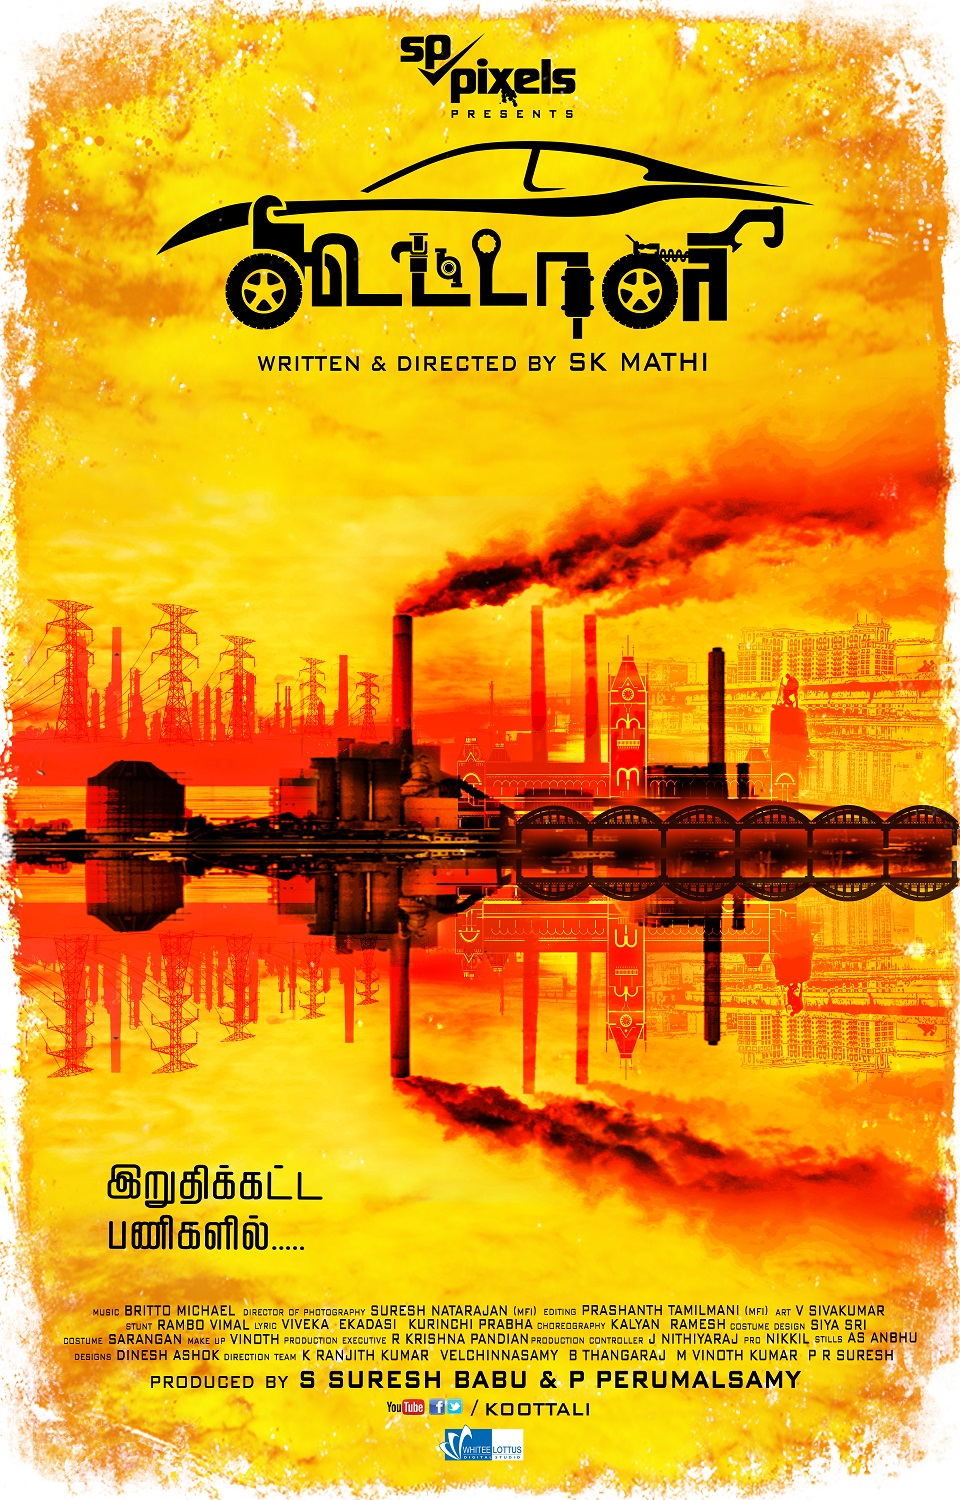 Search Tamil Movie: Chennai City Background Design From Koottali Movie